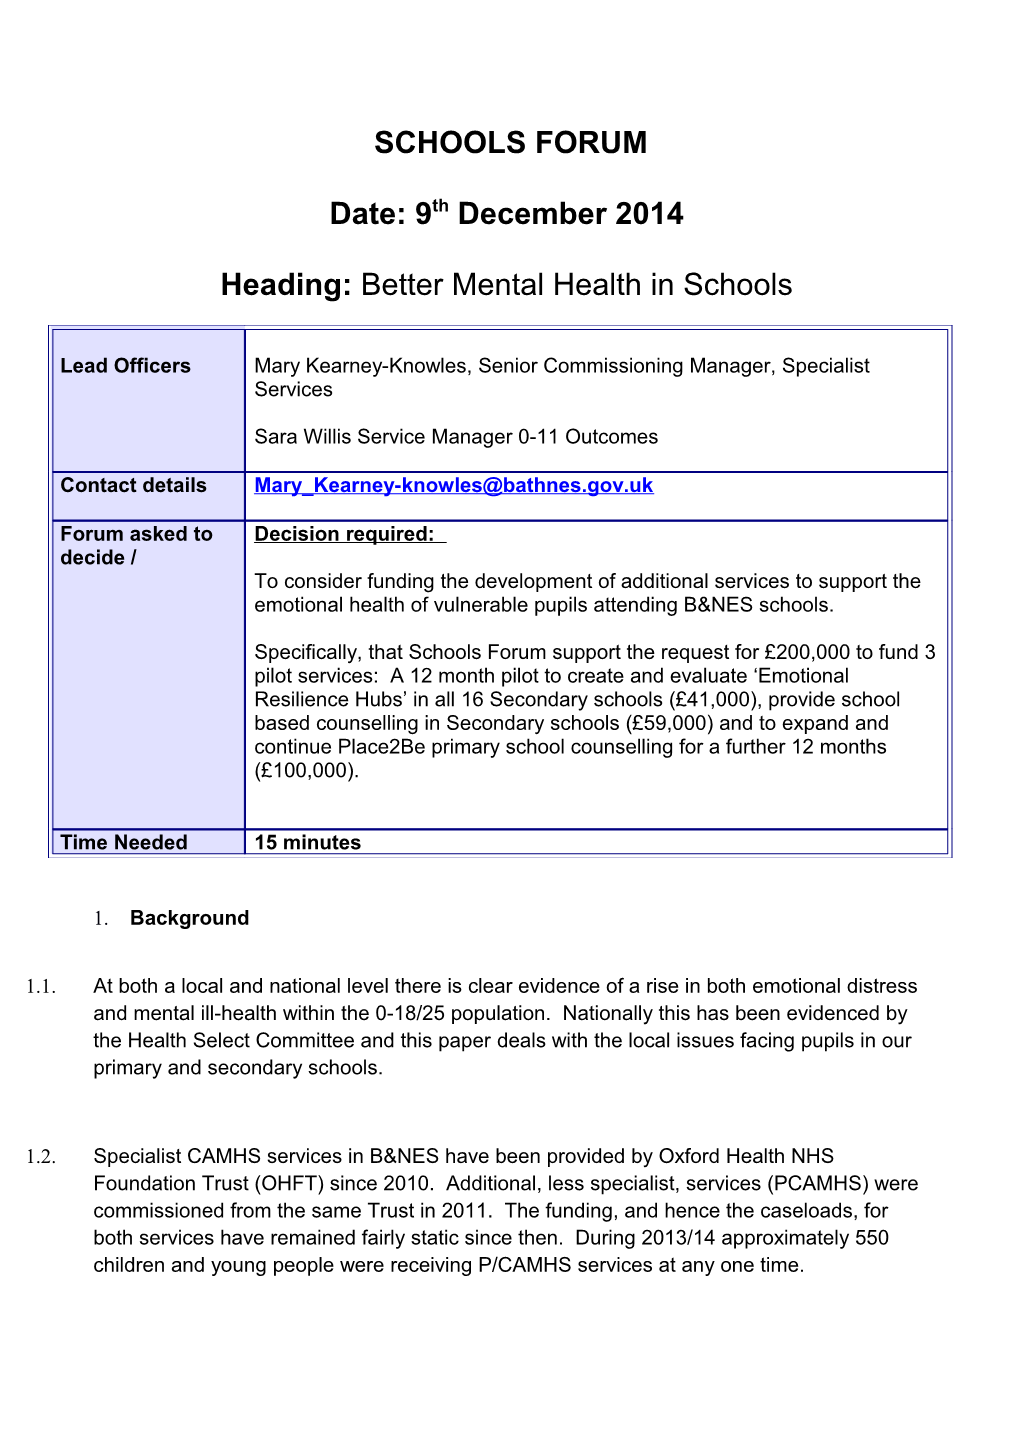 Heading:Better Mental Health in Schools